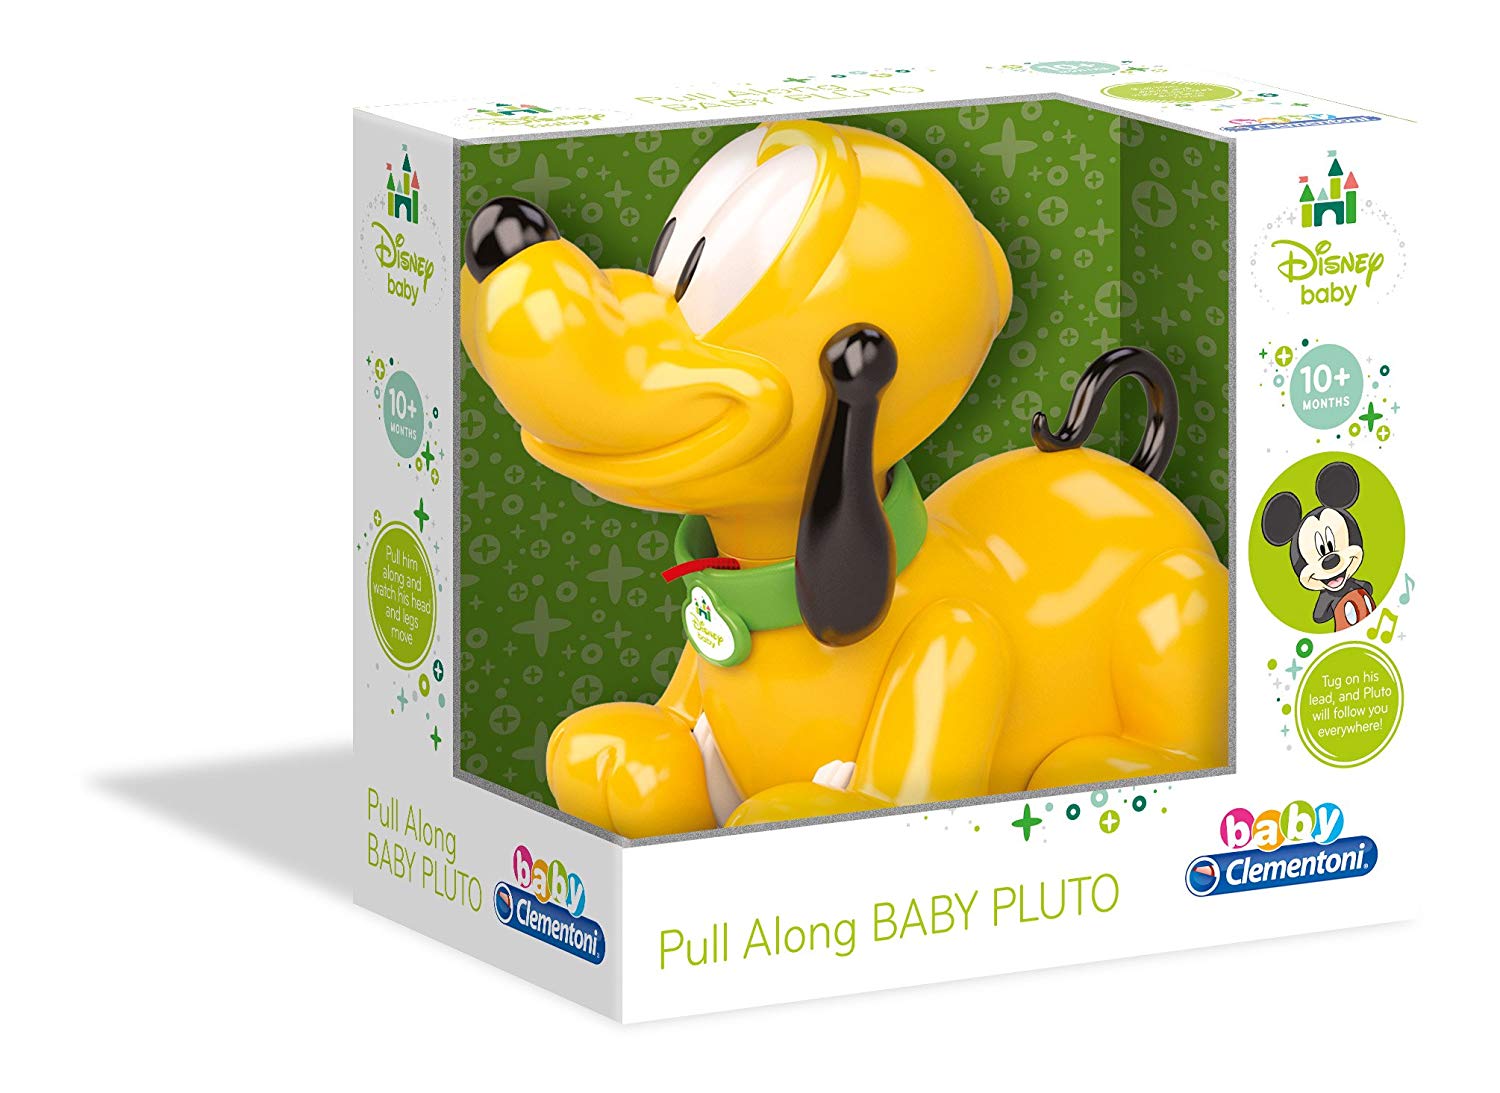 Clementoni Pull Along Baby Pluto